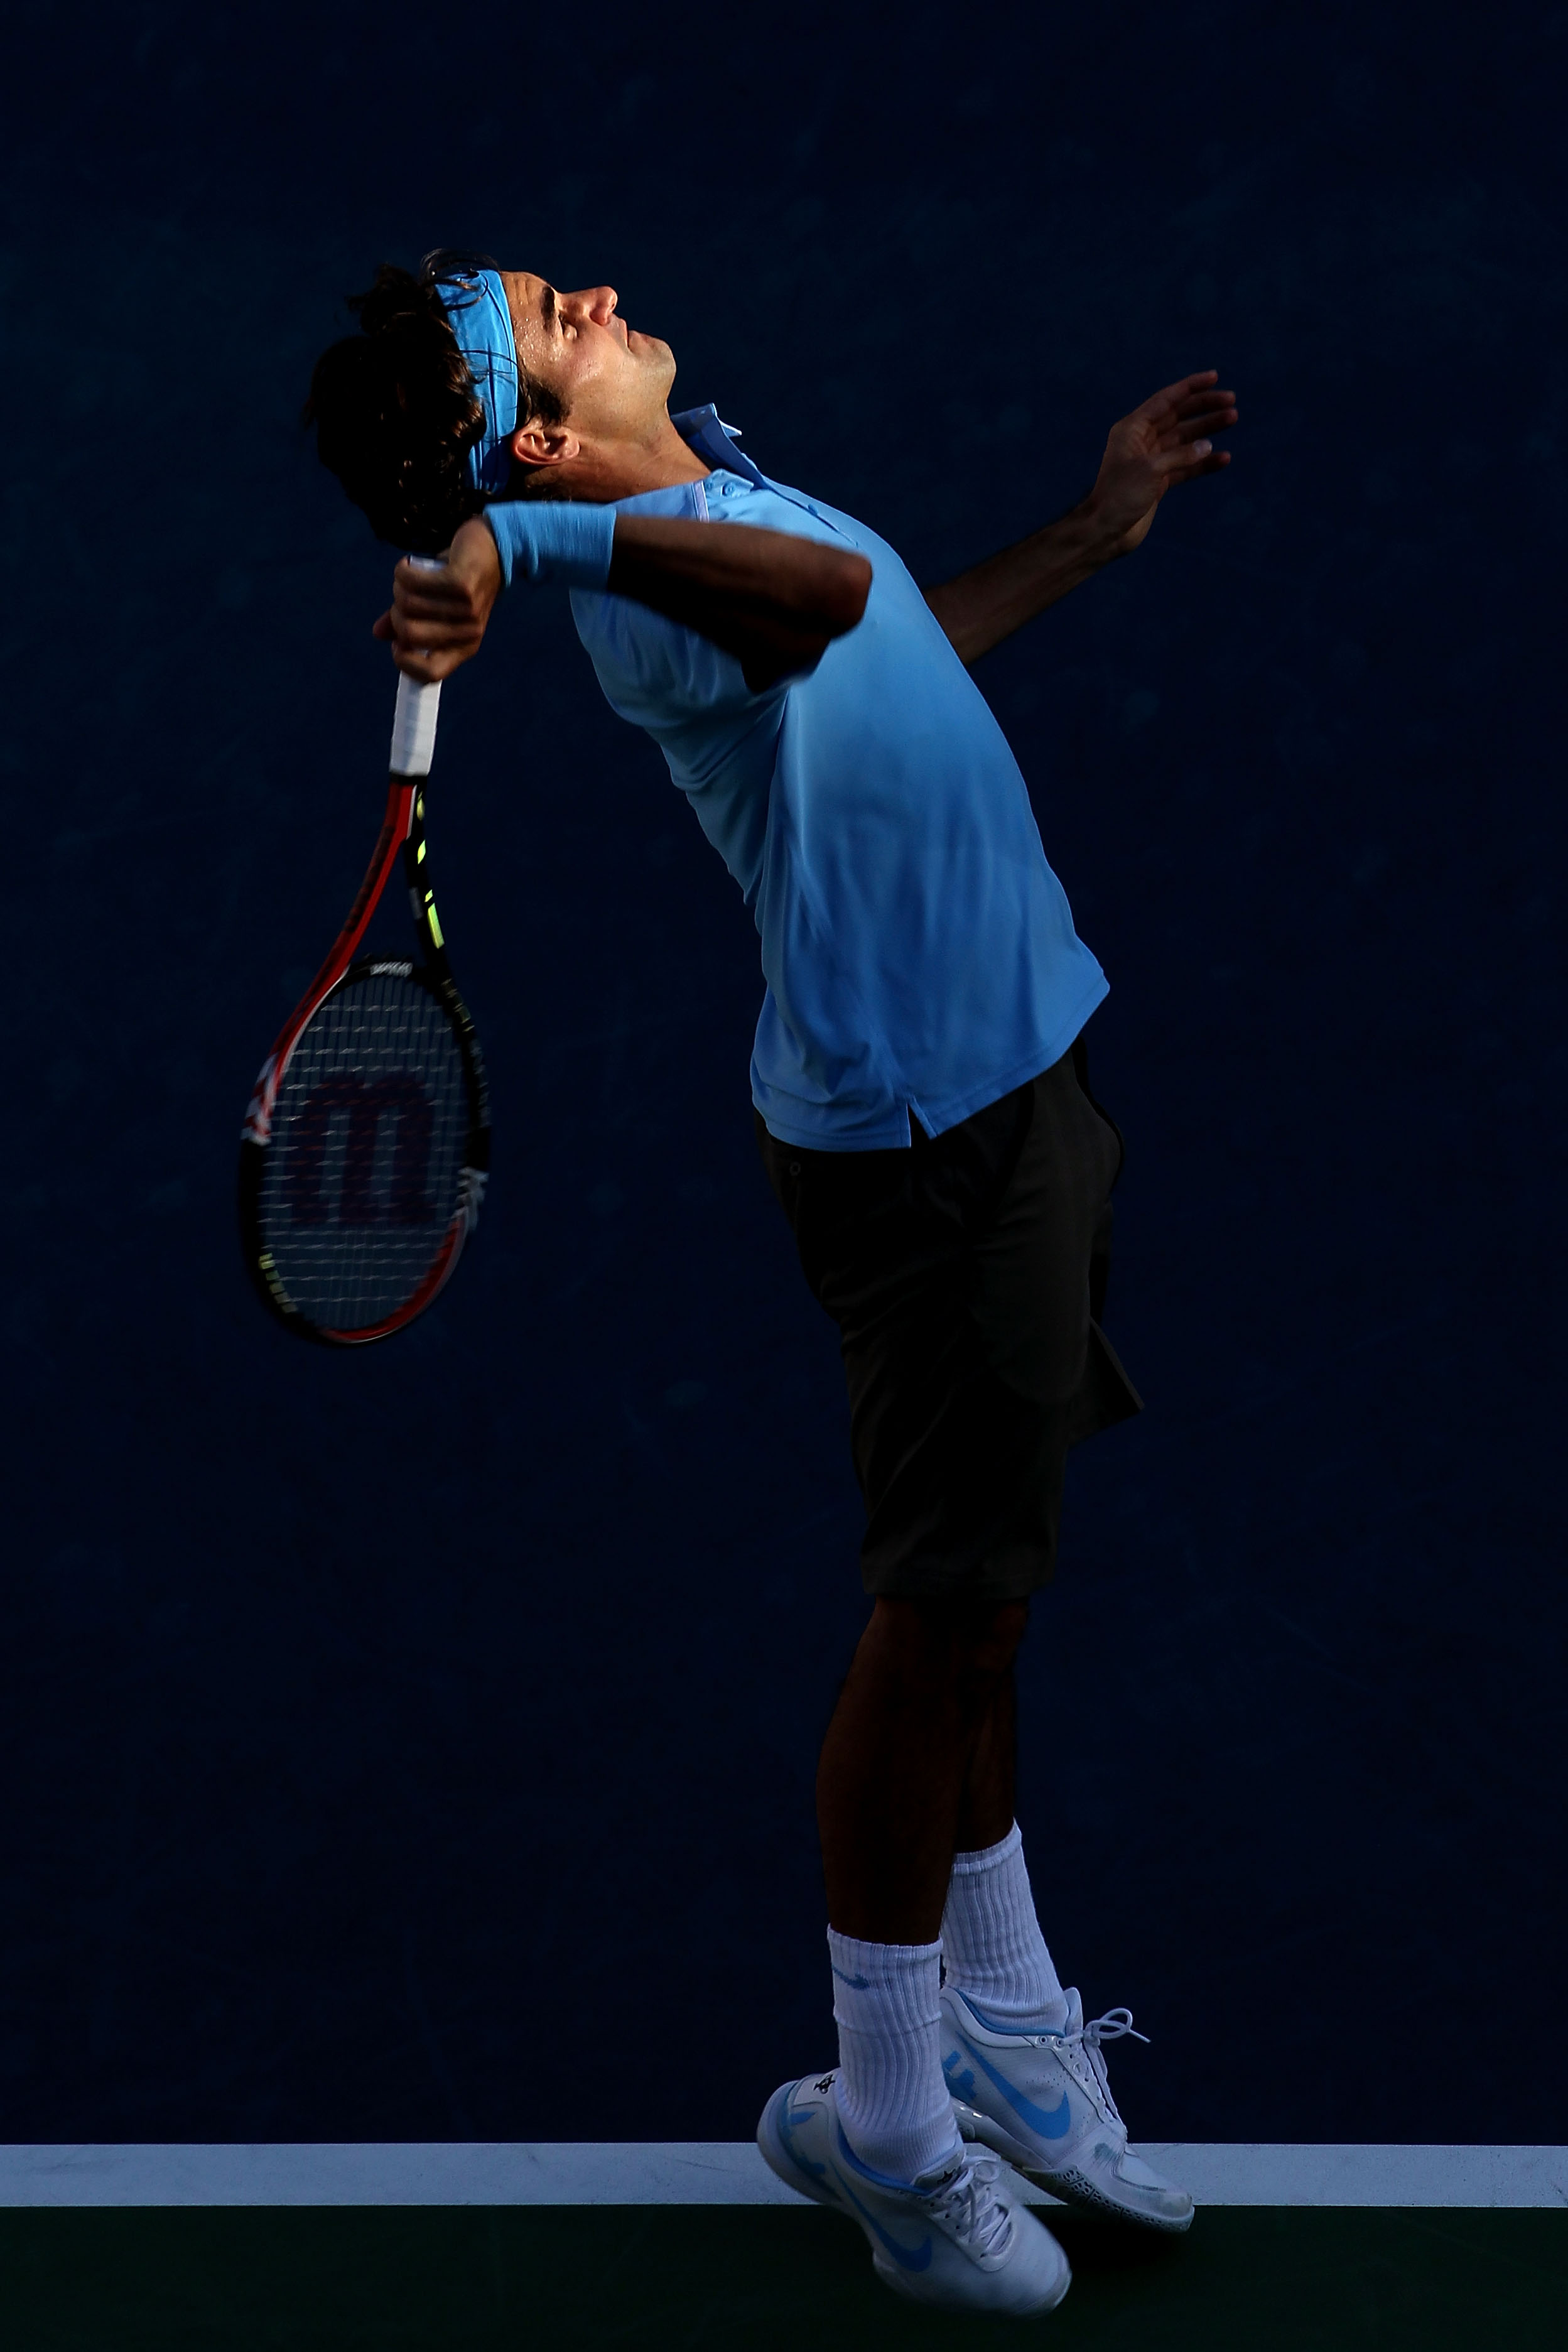 NEW YORK - SEPTEMBER 11:  Roger Federer of Switzerland serves against Novak Djokovic of Serbia during his men's singles semifinal match on day thirteen of the 2010 U.S. Open at the USTA Billie Jean King National Tennis Center on September 11, 2010 in the